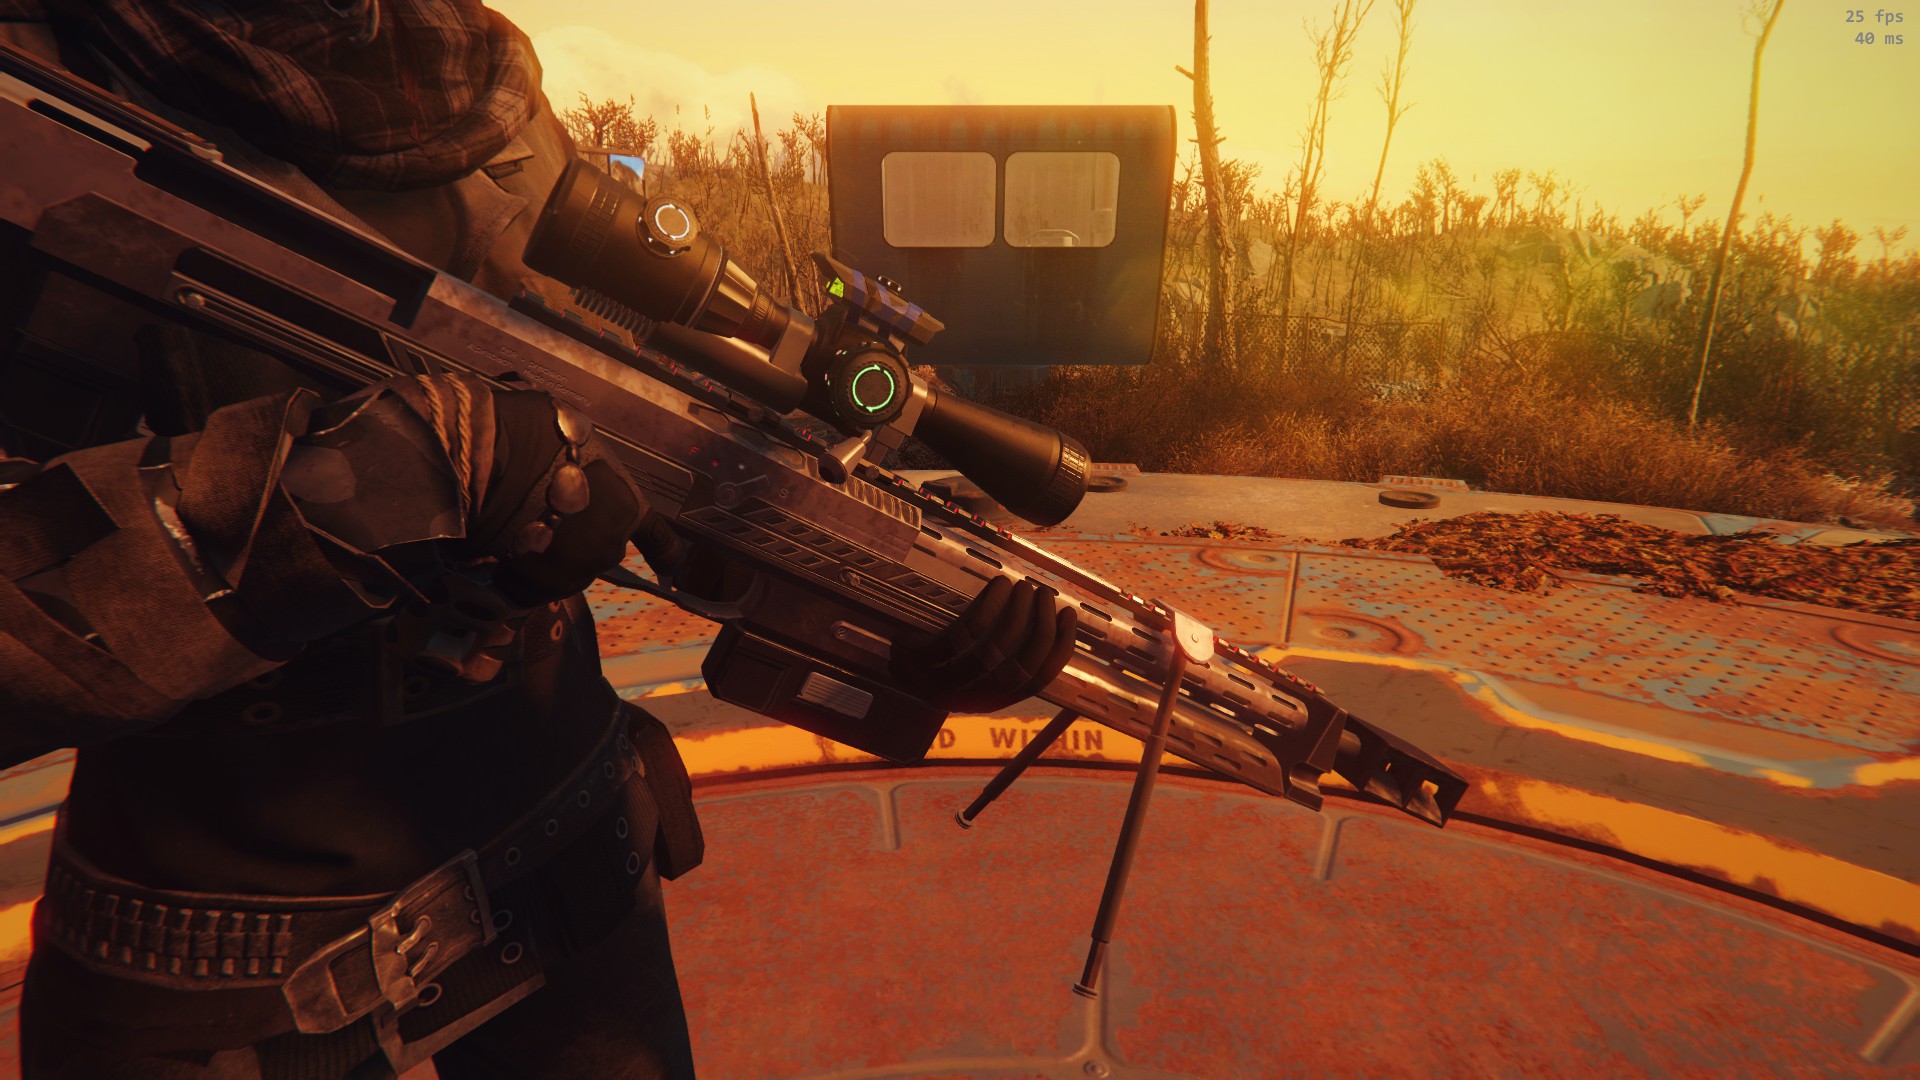 Dsr 50 High Power Sniper Rifle 日本語化対応 武器 Fallout4 Mod データベース Mod紹介 まとめサイト